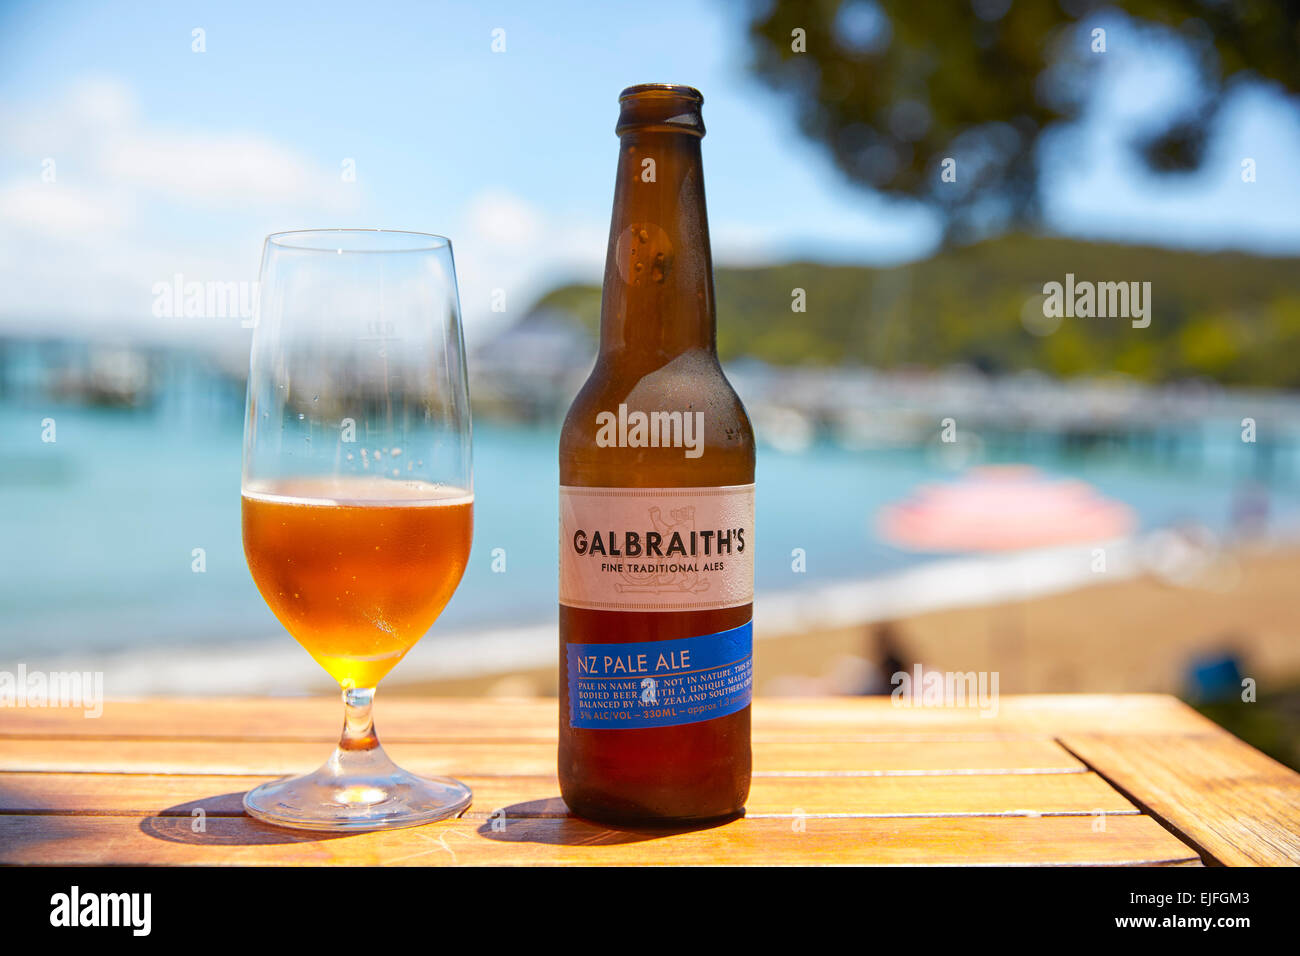 Galbraith's, New Zealand Pale Ale Stock Photo